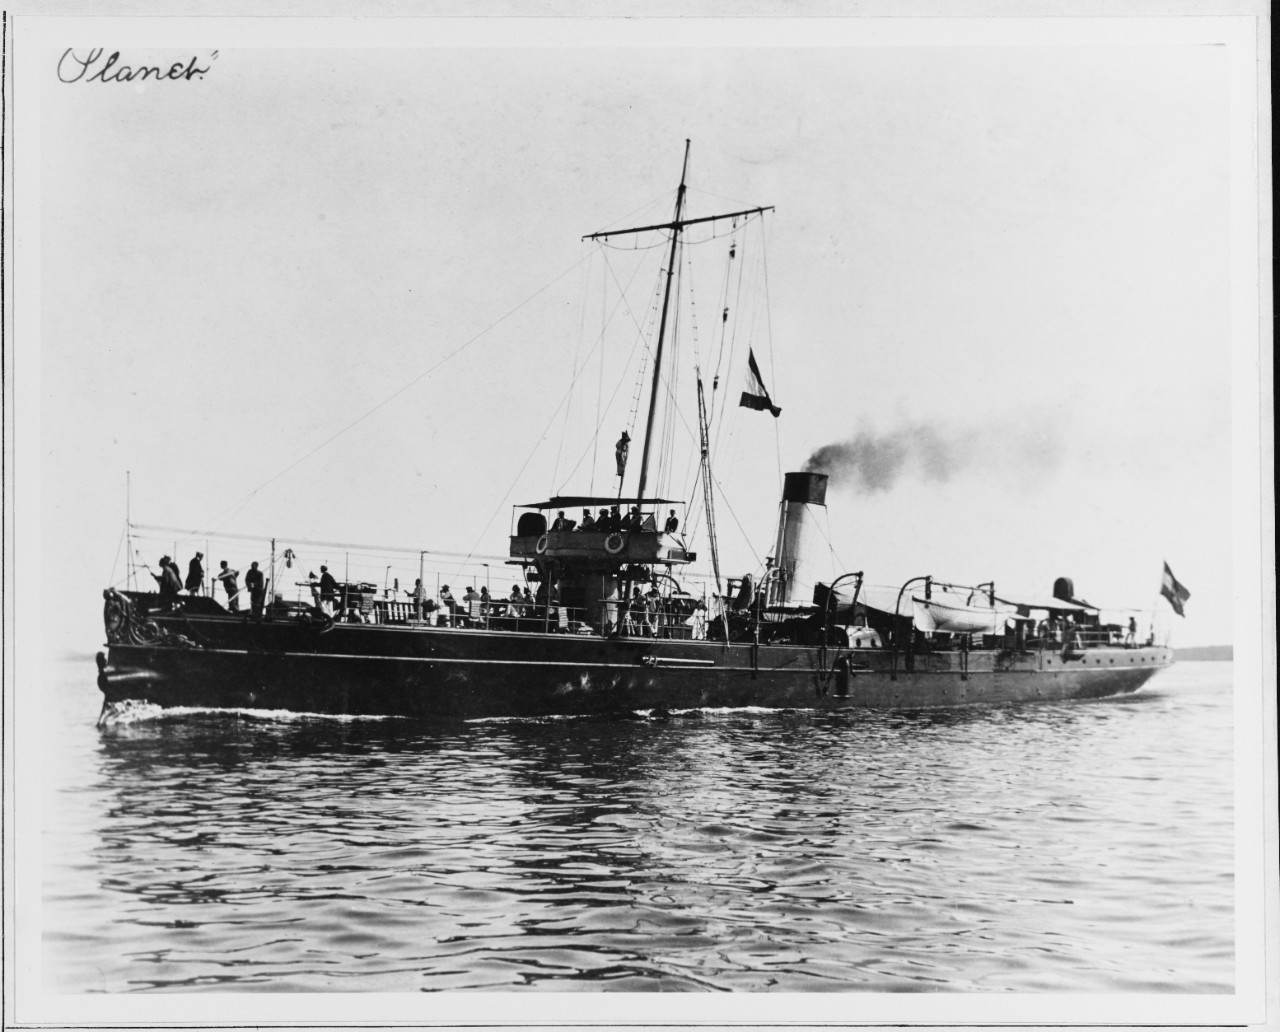 PLANET (Austrian Torpedo gunboat, 1889)